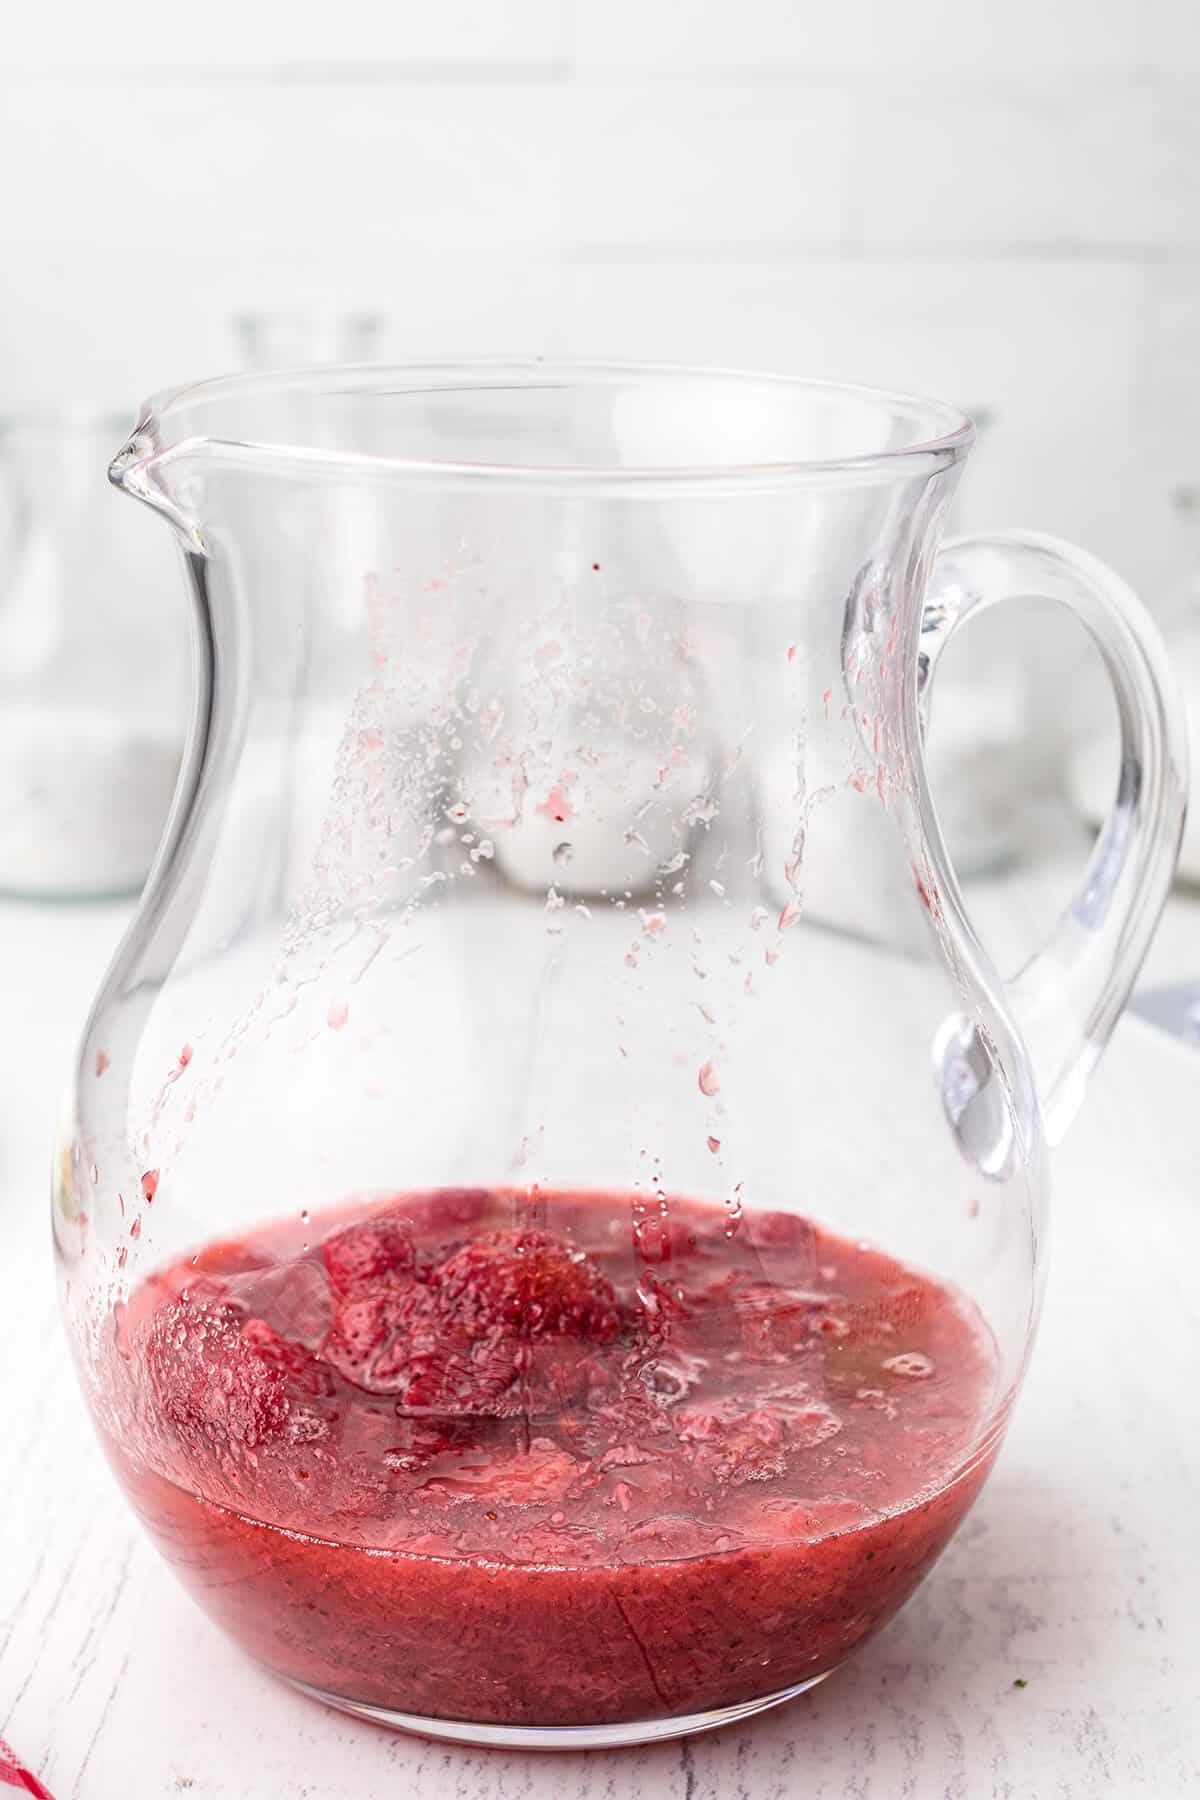 Thawed frozen strawberries in a glass pitcher.